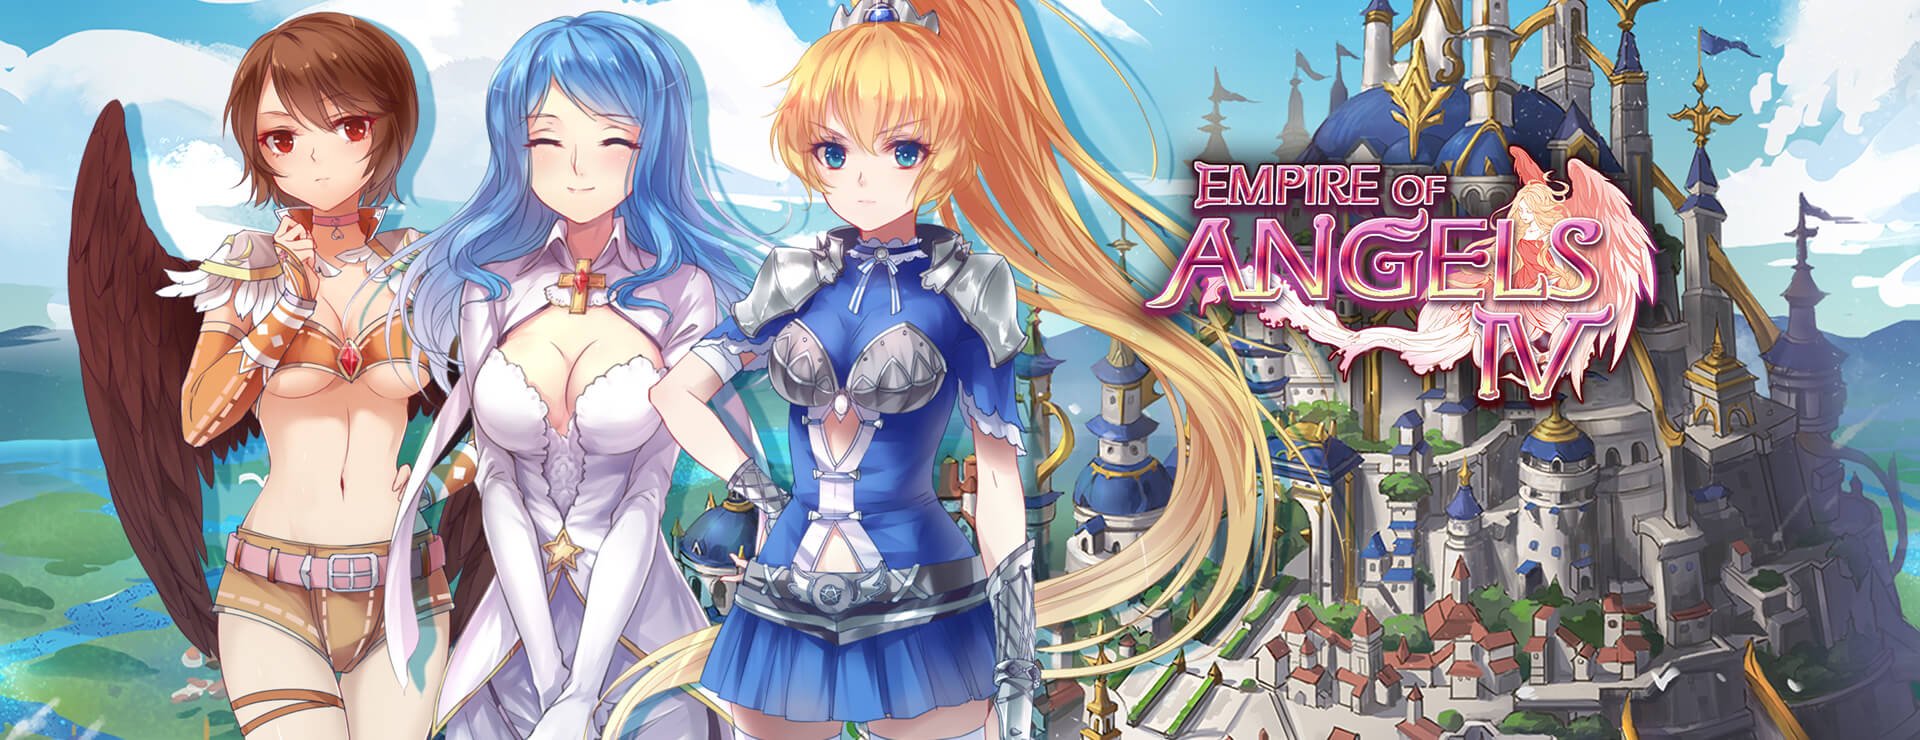 Empire of Angels IV - Action Adventure Spiel